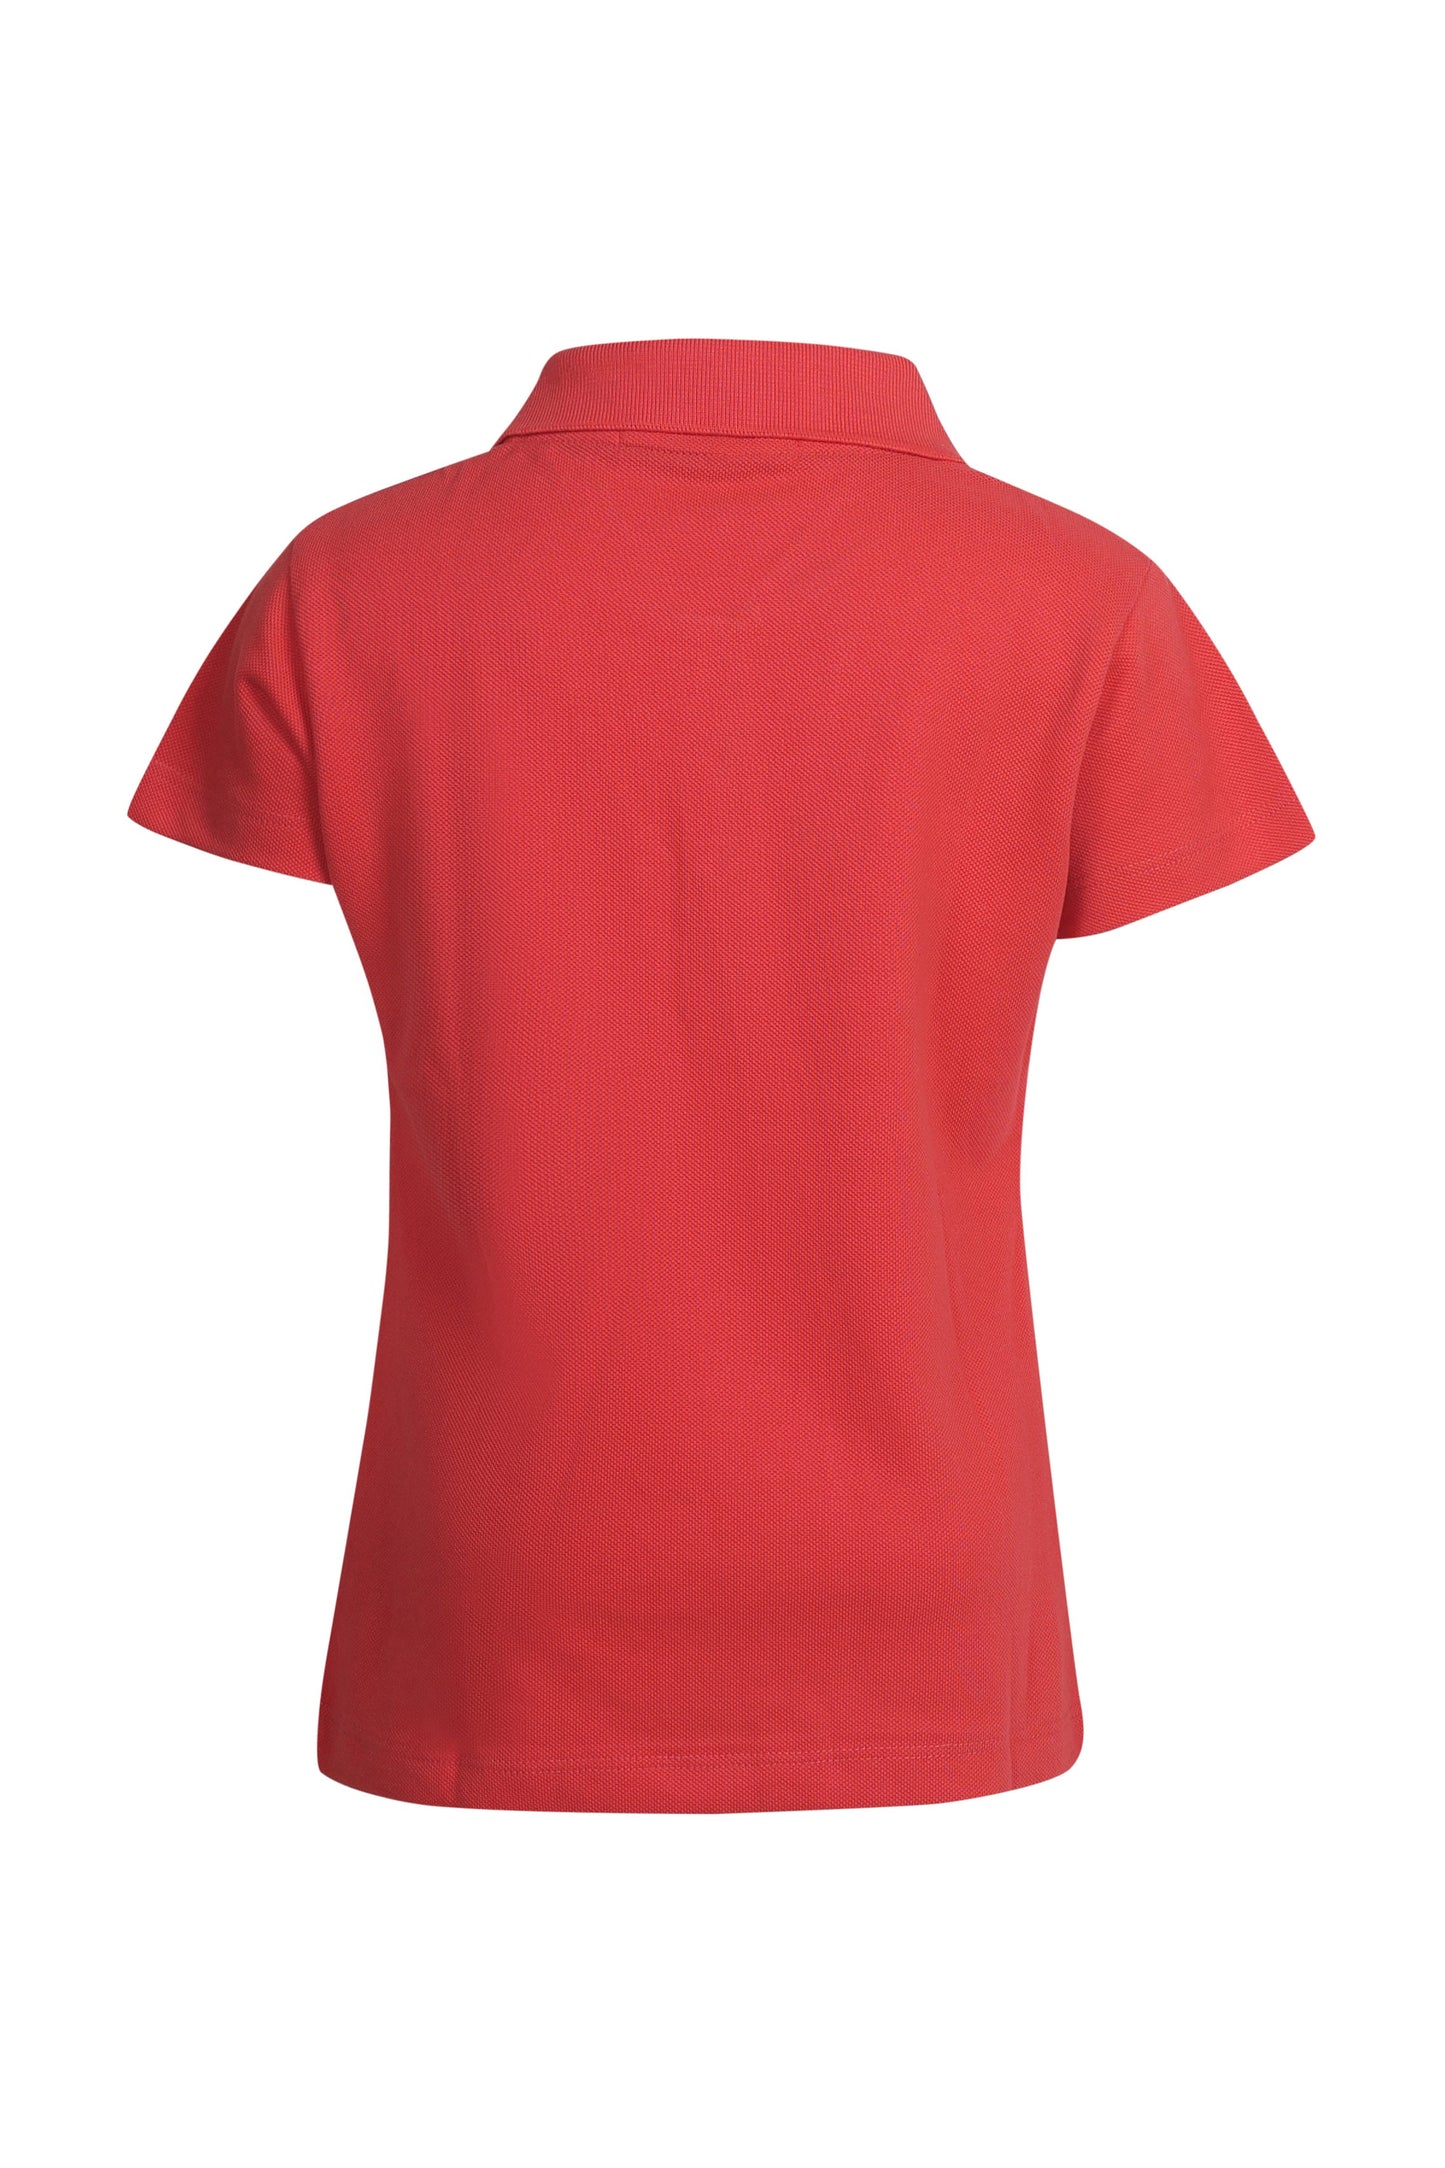 Pampolina Girls  Solid Pique Kint  Collar T-Shirt - Coral